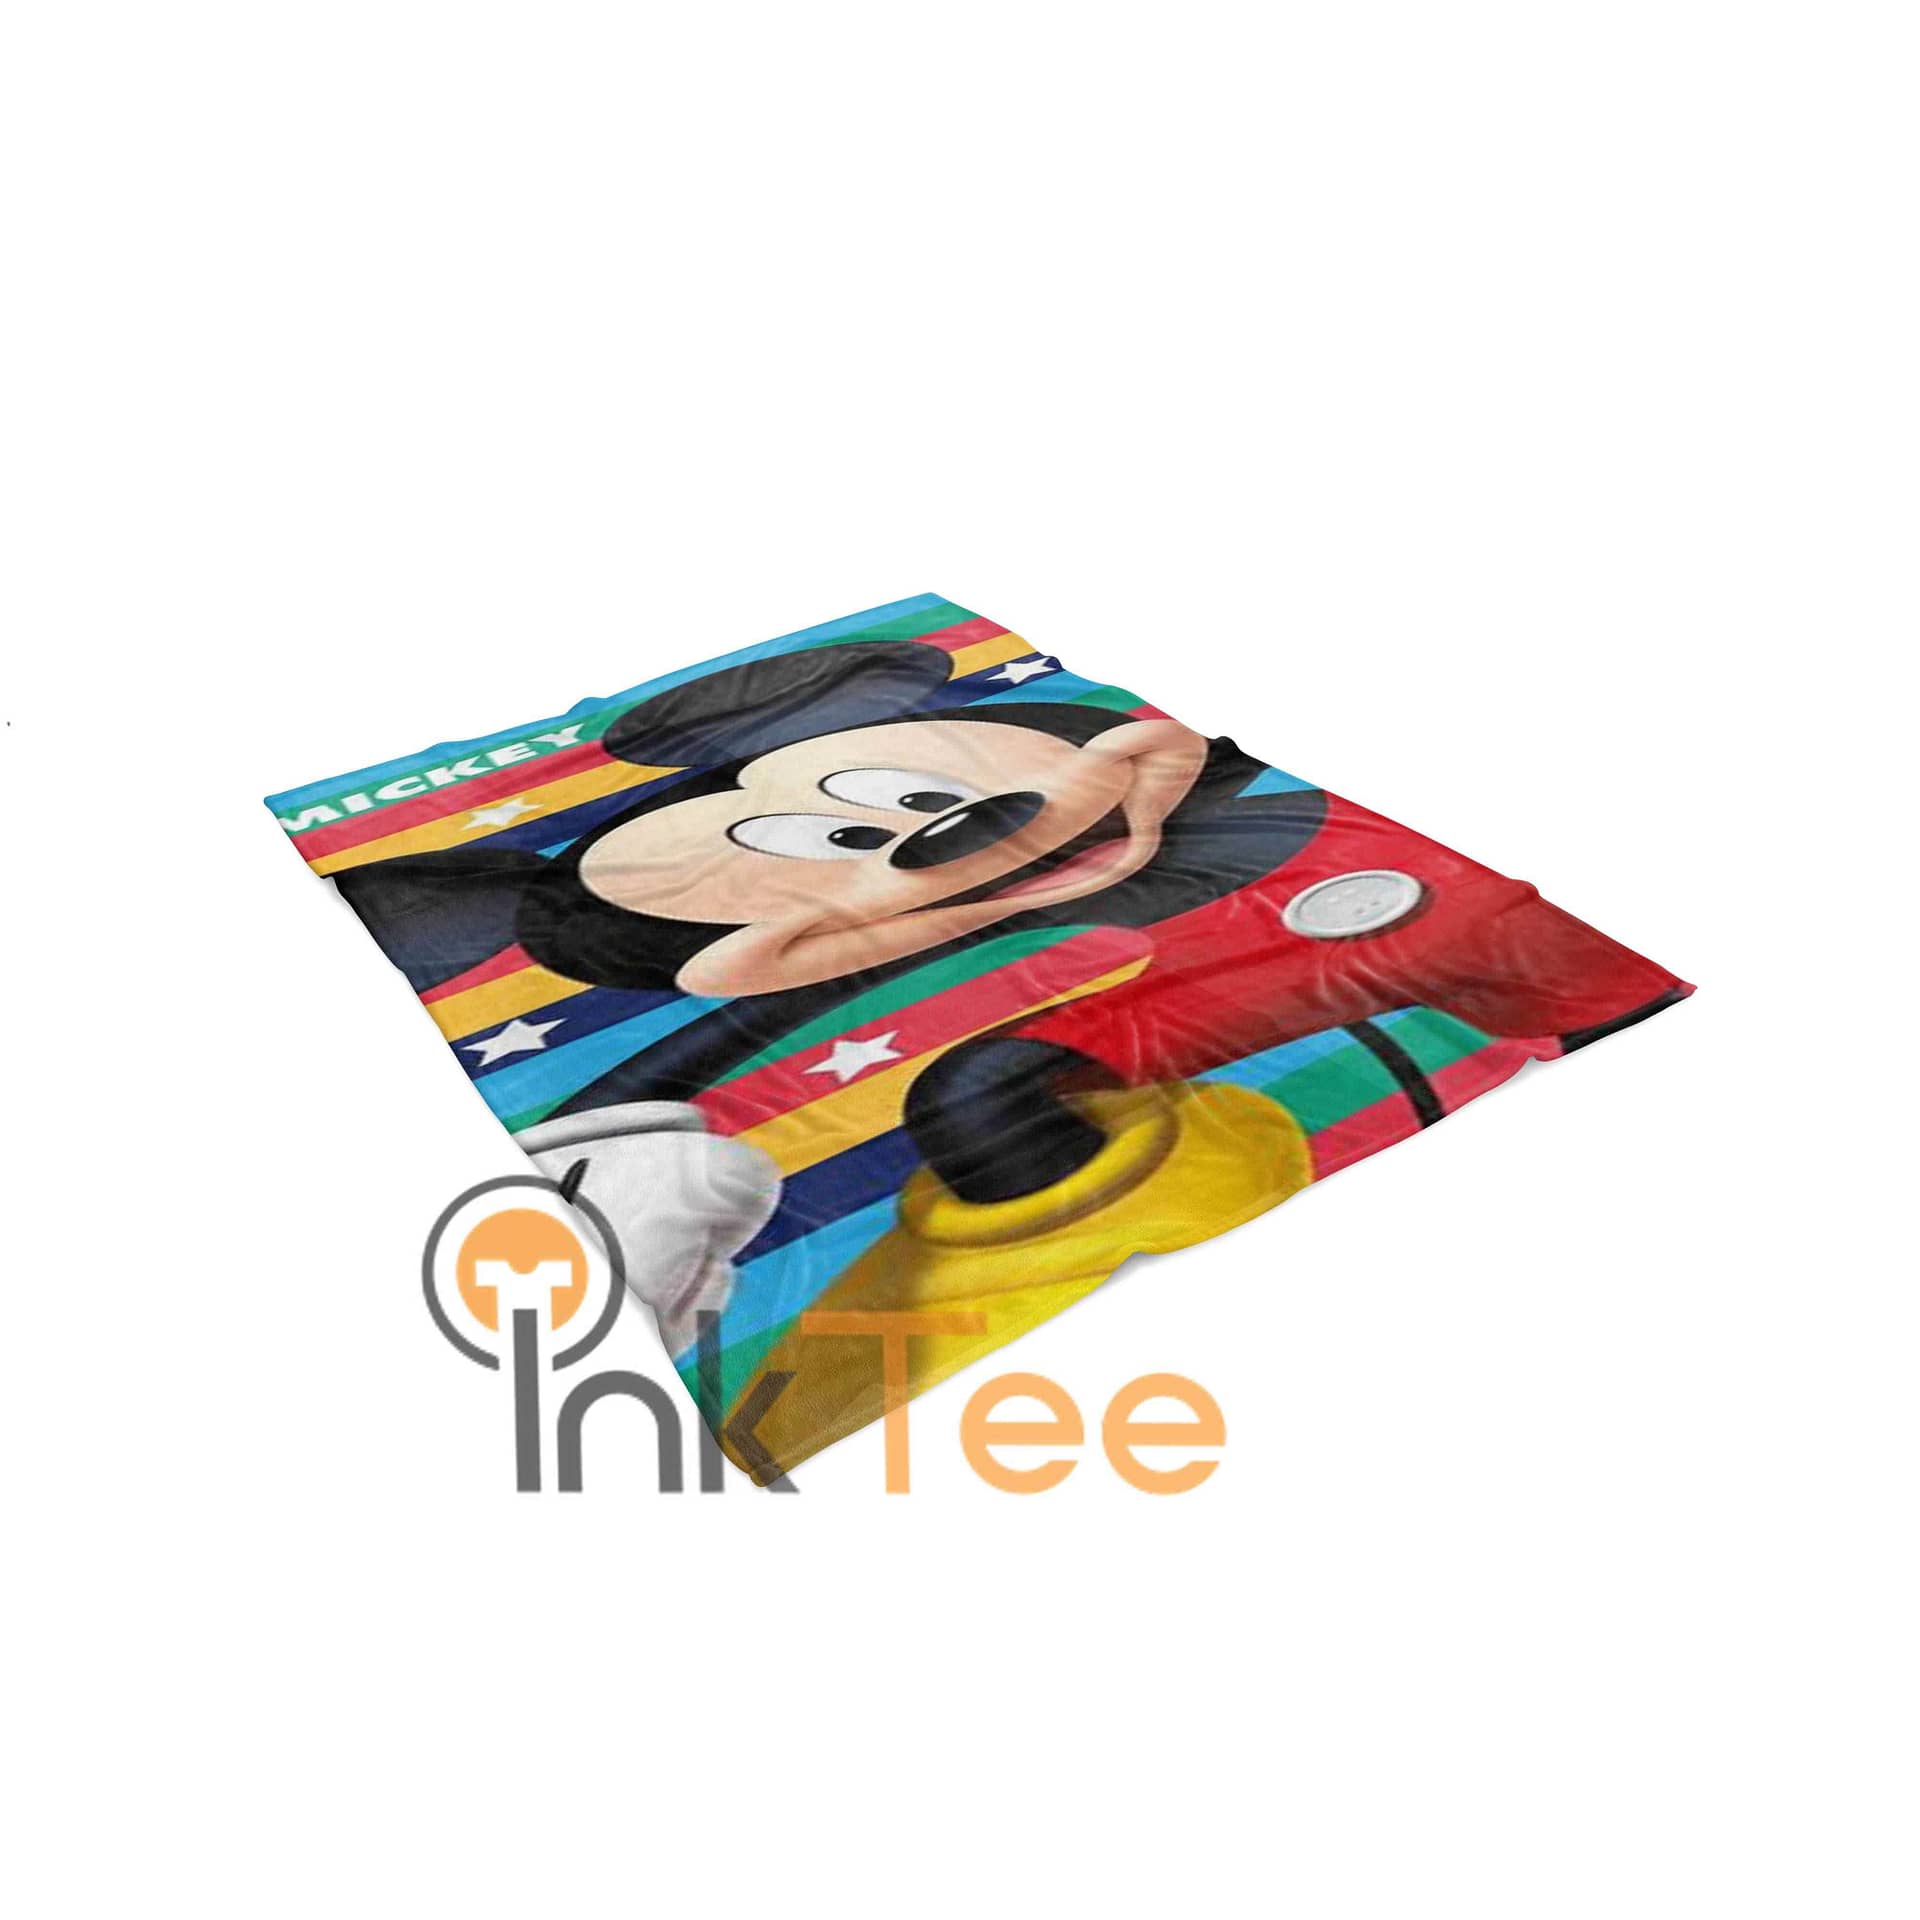 Inktee Store - Disney Mickey Mouse Limited Edition Amazon Best Seller Sku 4093 Fleece Blanket Image